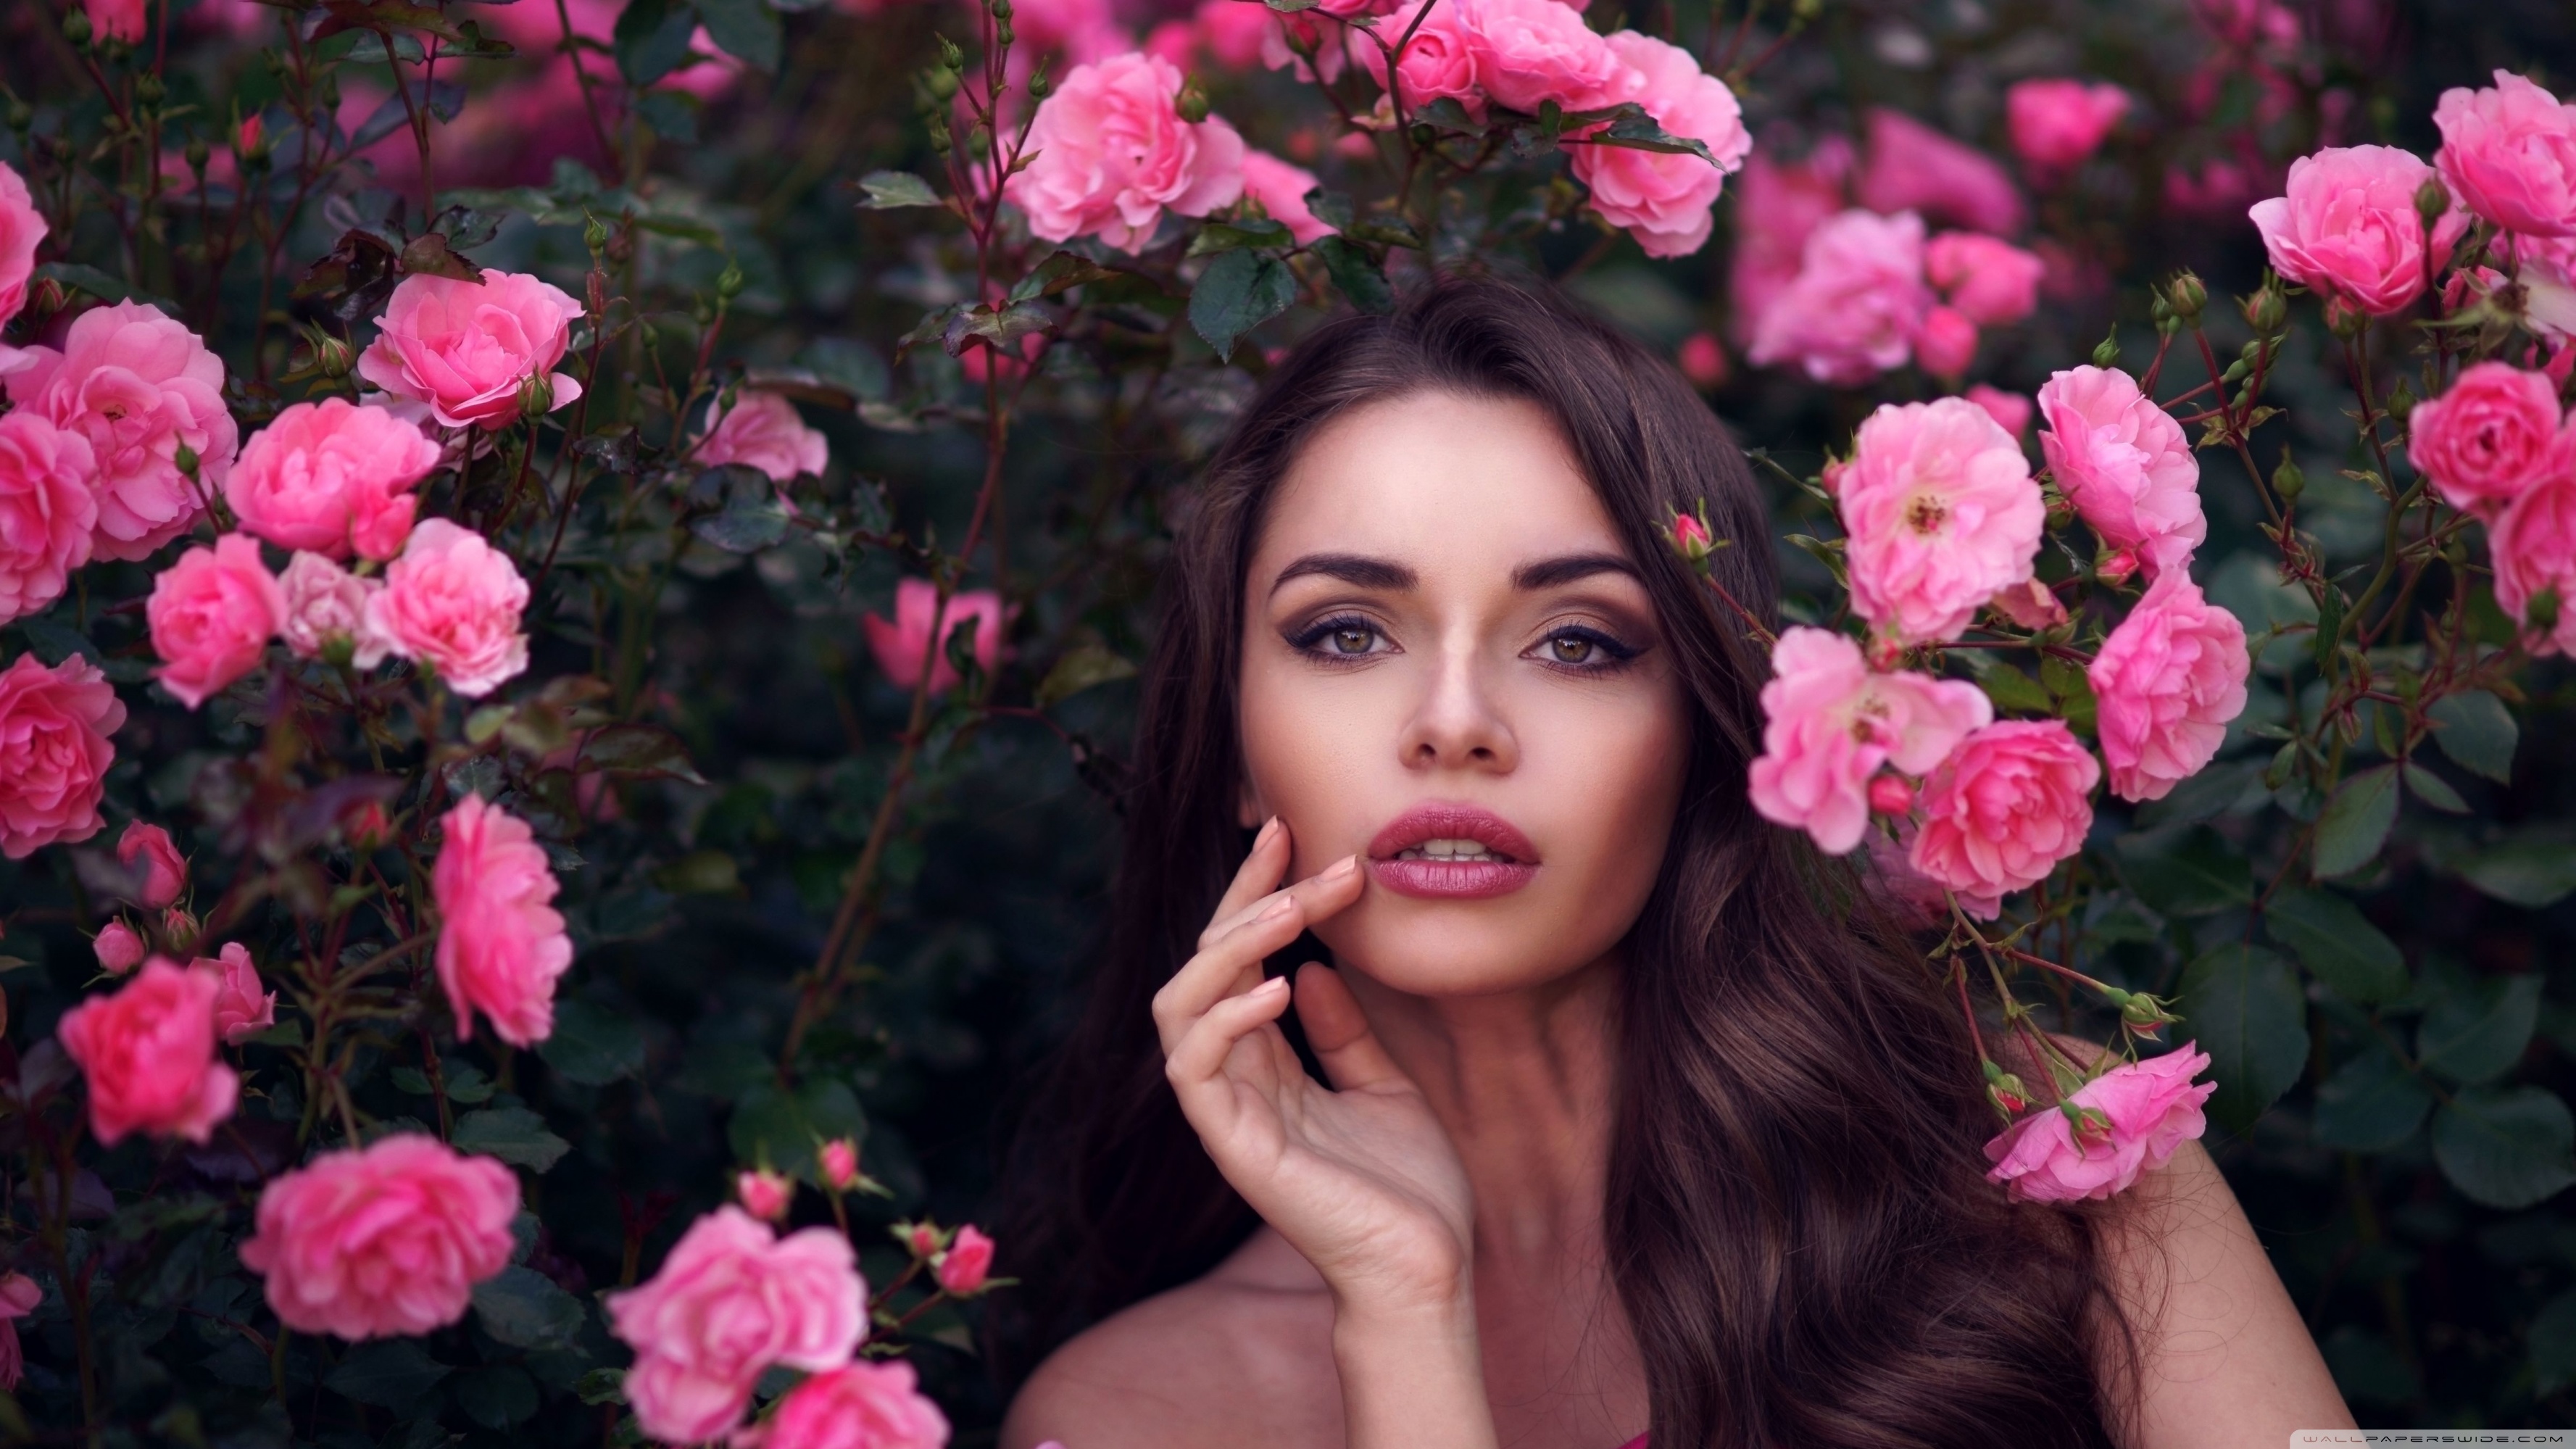 Divine Beauty: A Goddess in a Rose Garden by oanarinaldi on DeviantArt